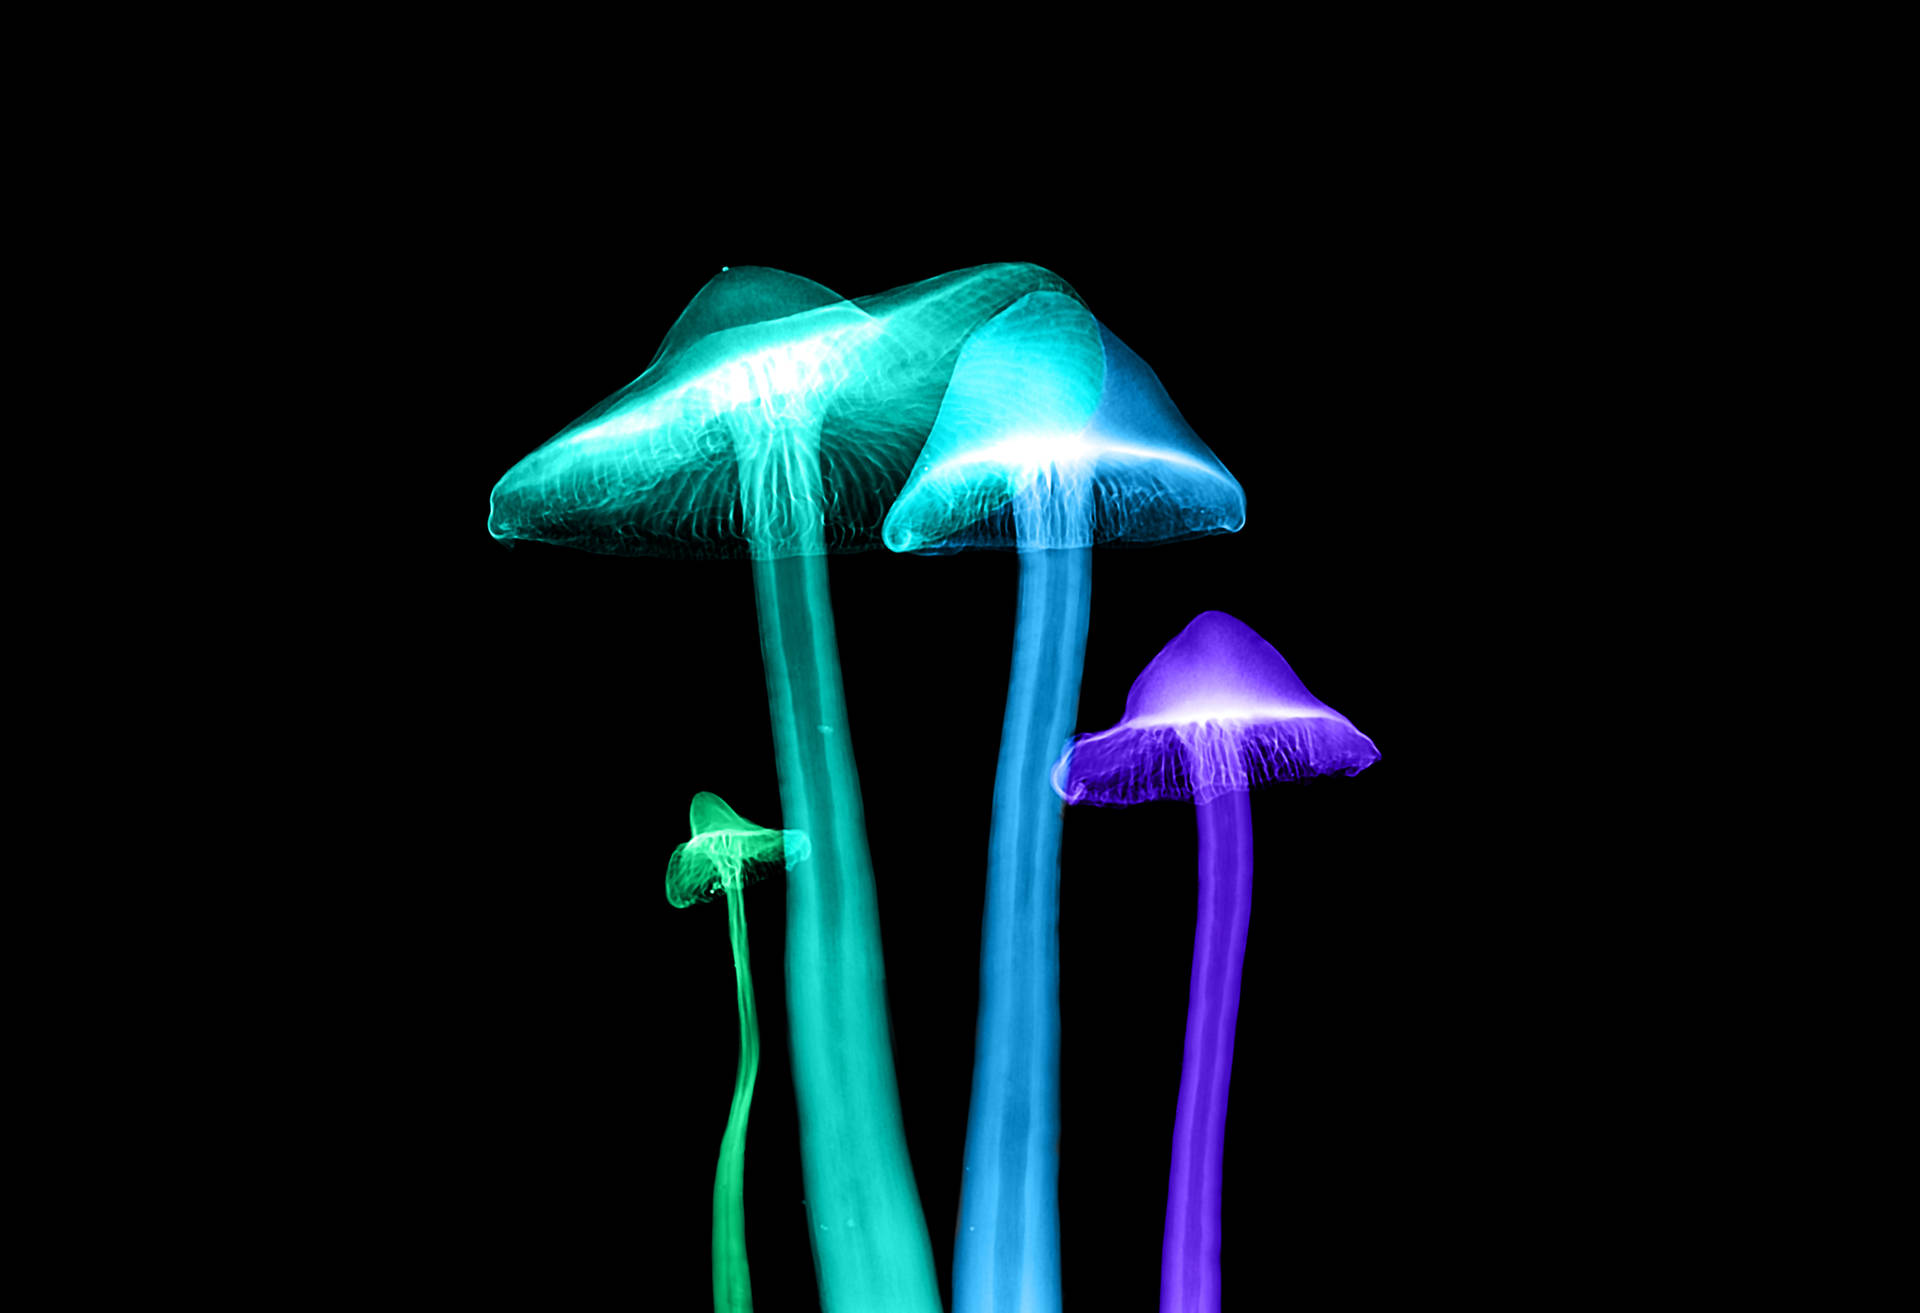 A Beautiful Display Of Glowing Mushroom Lights. Wallpaper